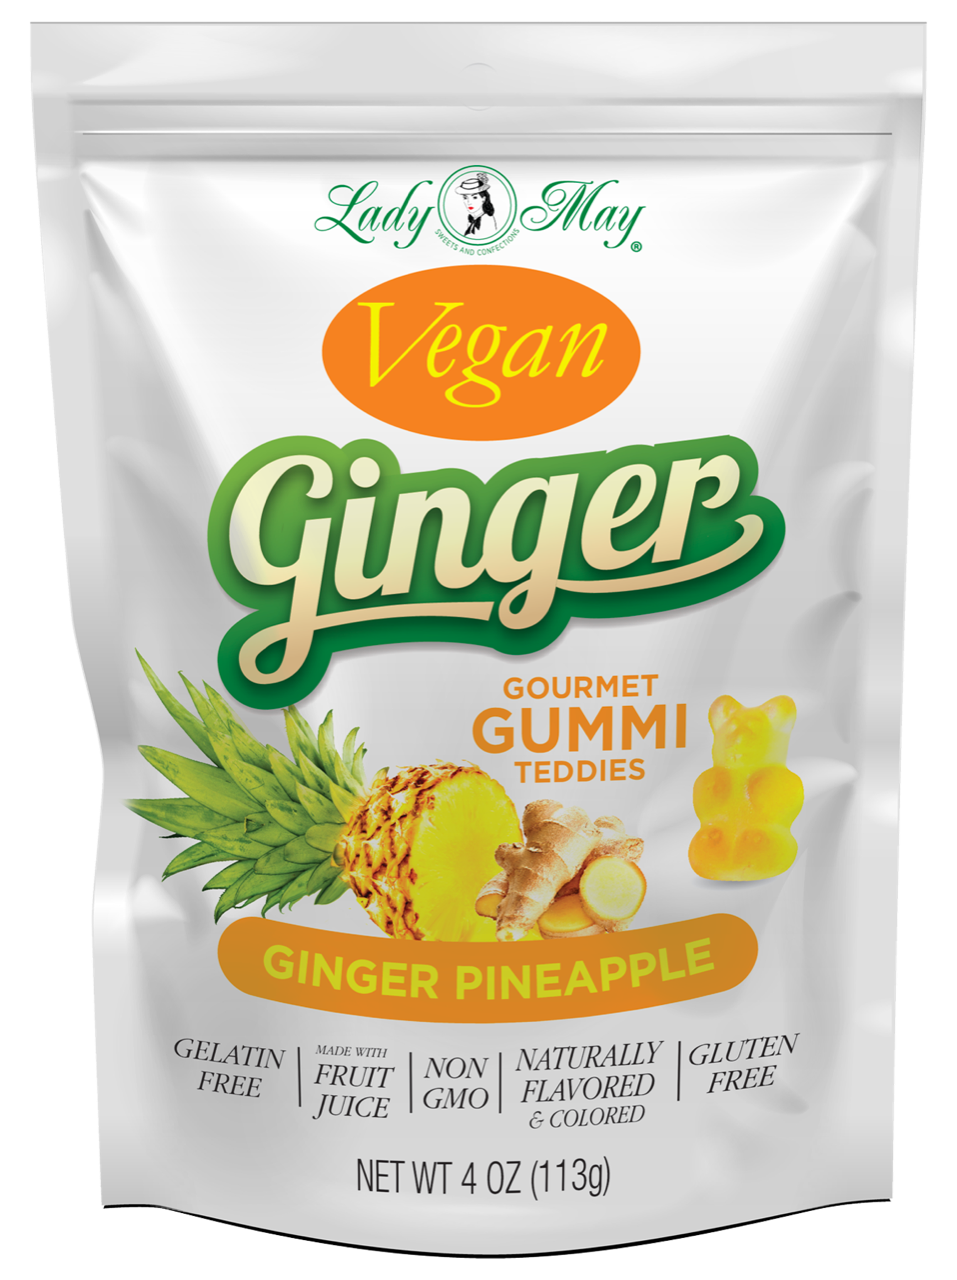 Vegan Ginger-Pineapple Gummi Teddies